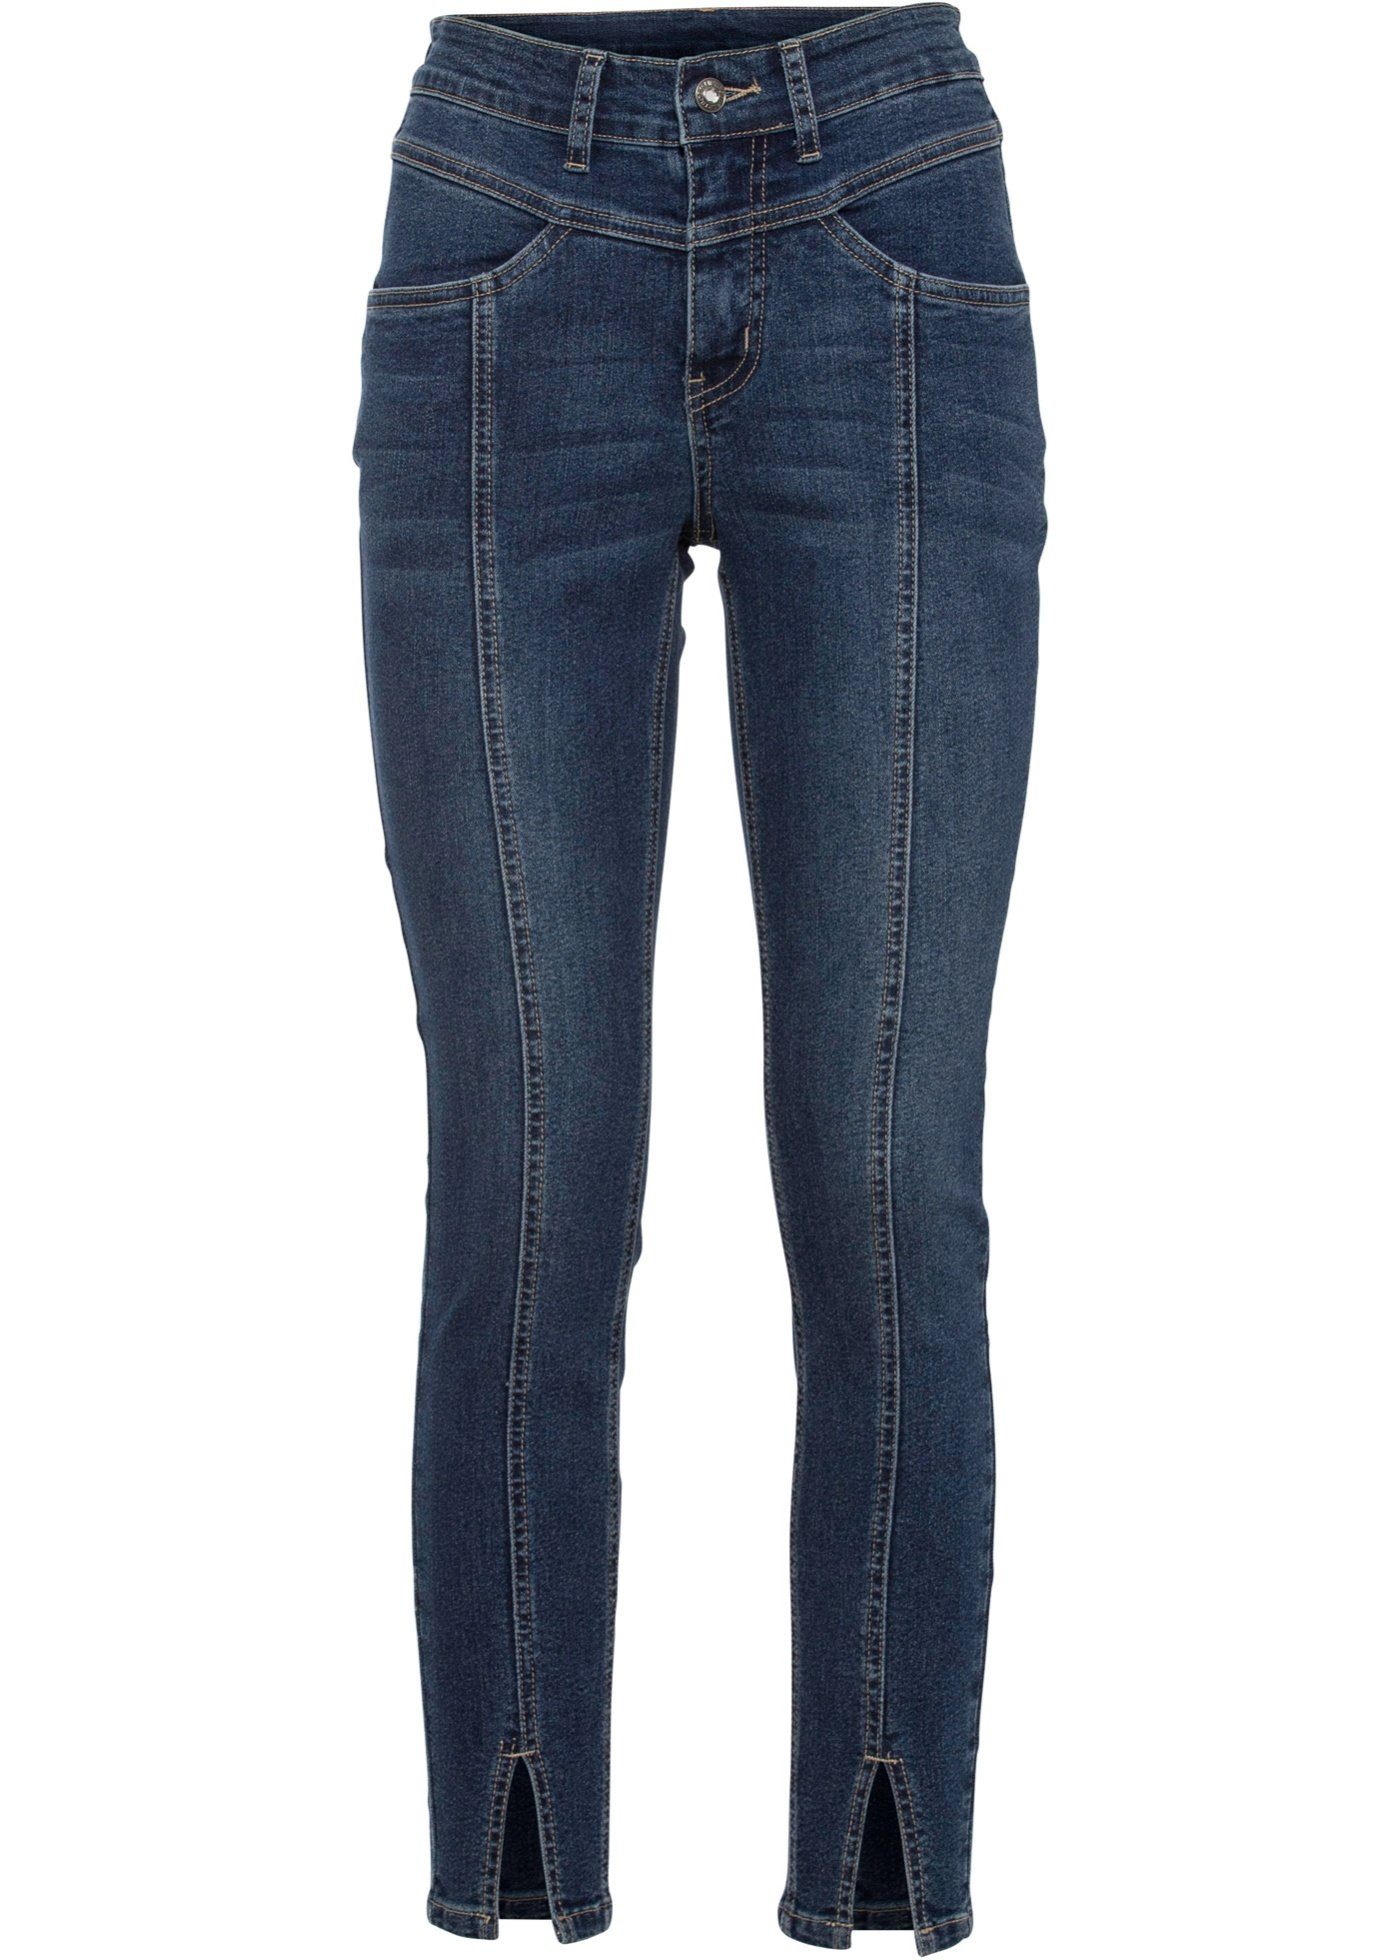 Hose Jeans blue Damen 946757 stone YESET Stretch Stretch-Jeans